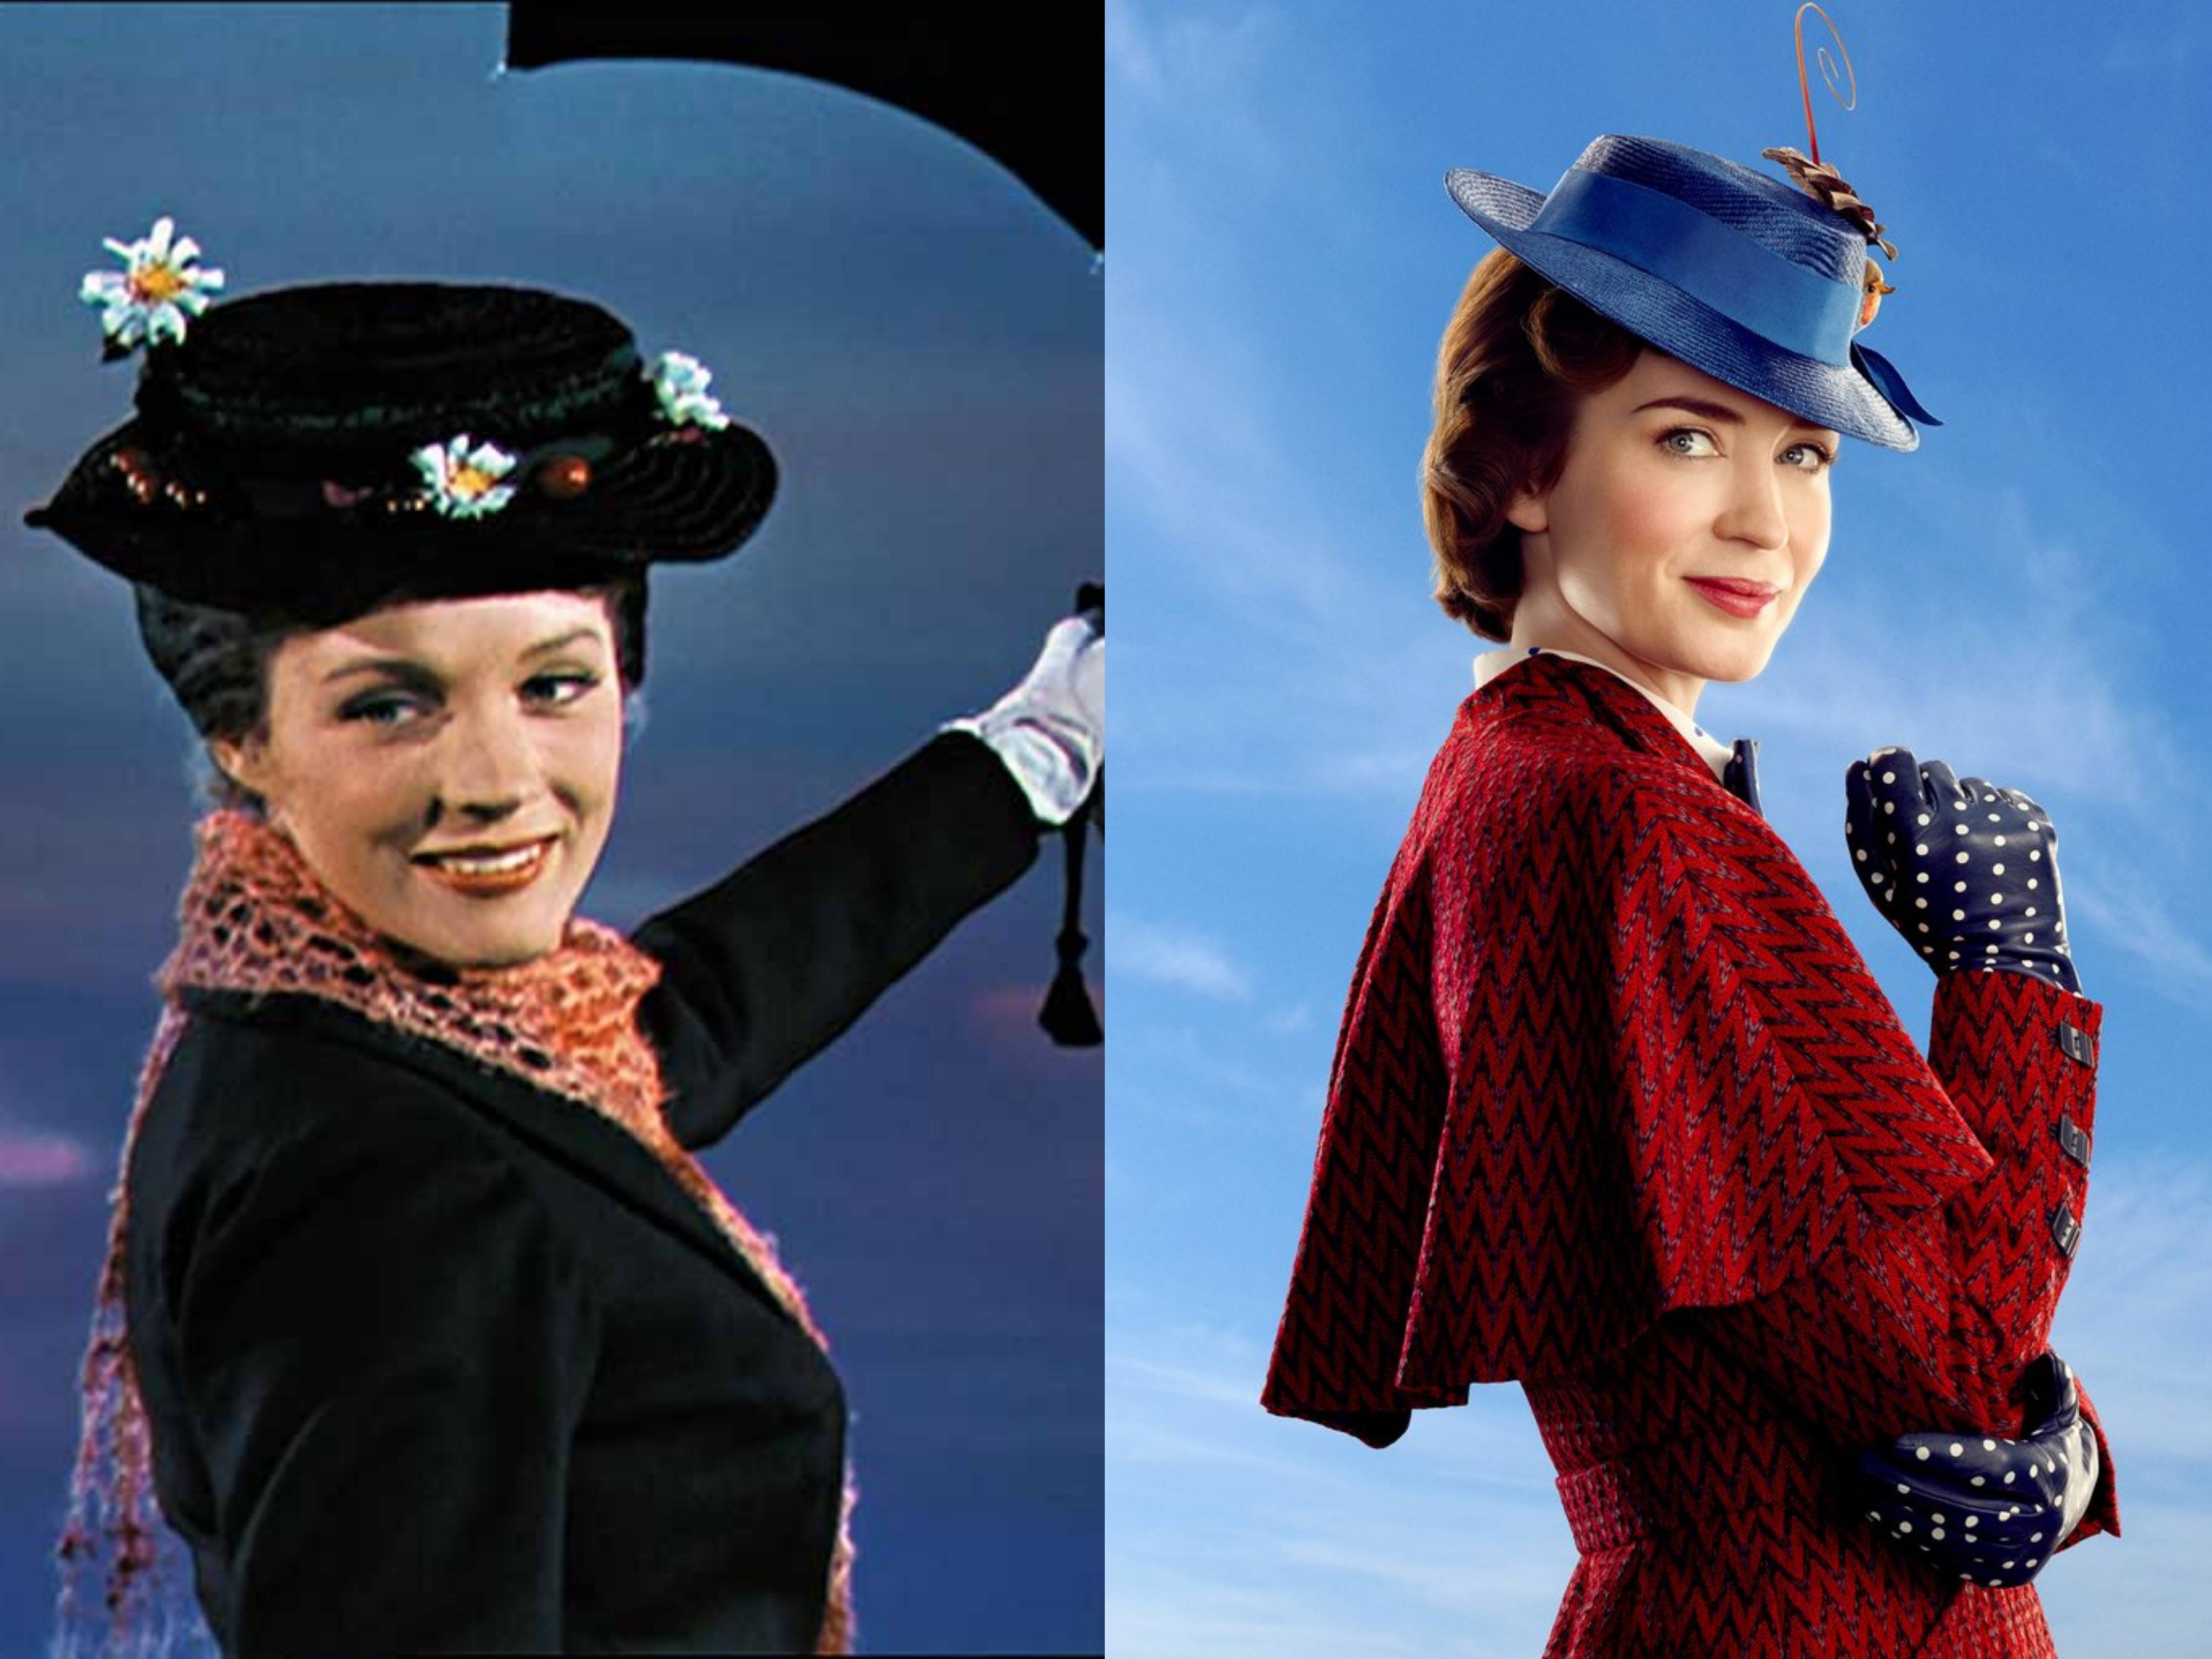 Mary Poppins Returns 2018 Wallpapers - WallpaperSafari.